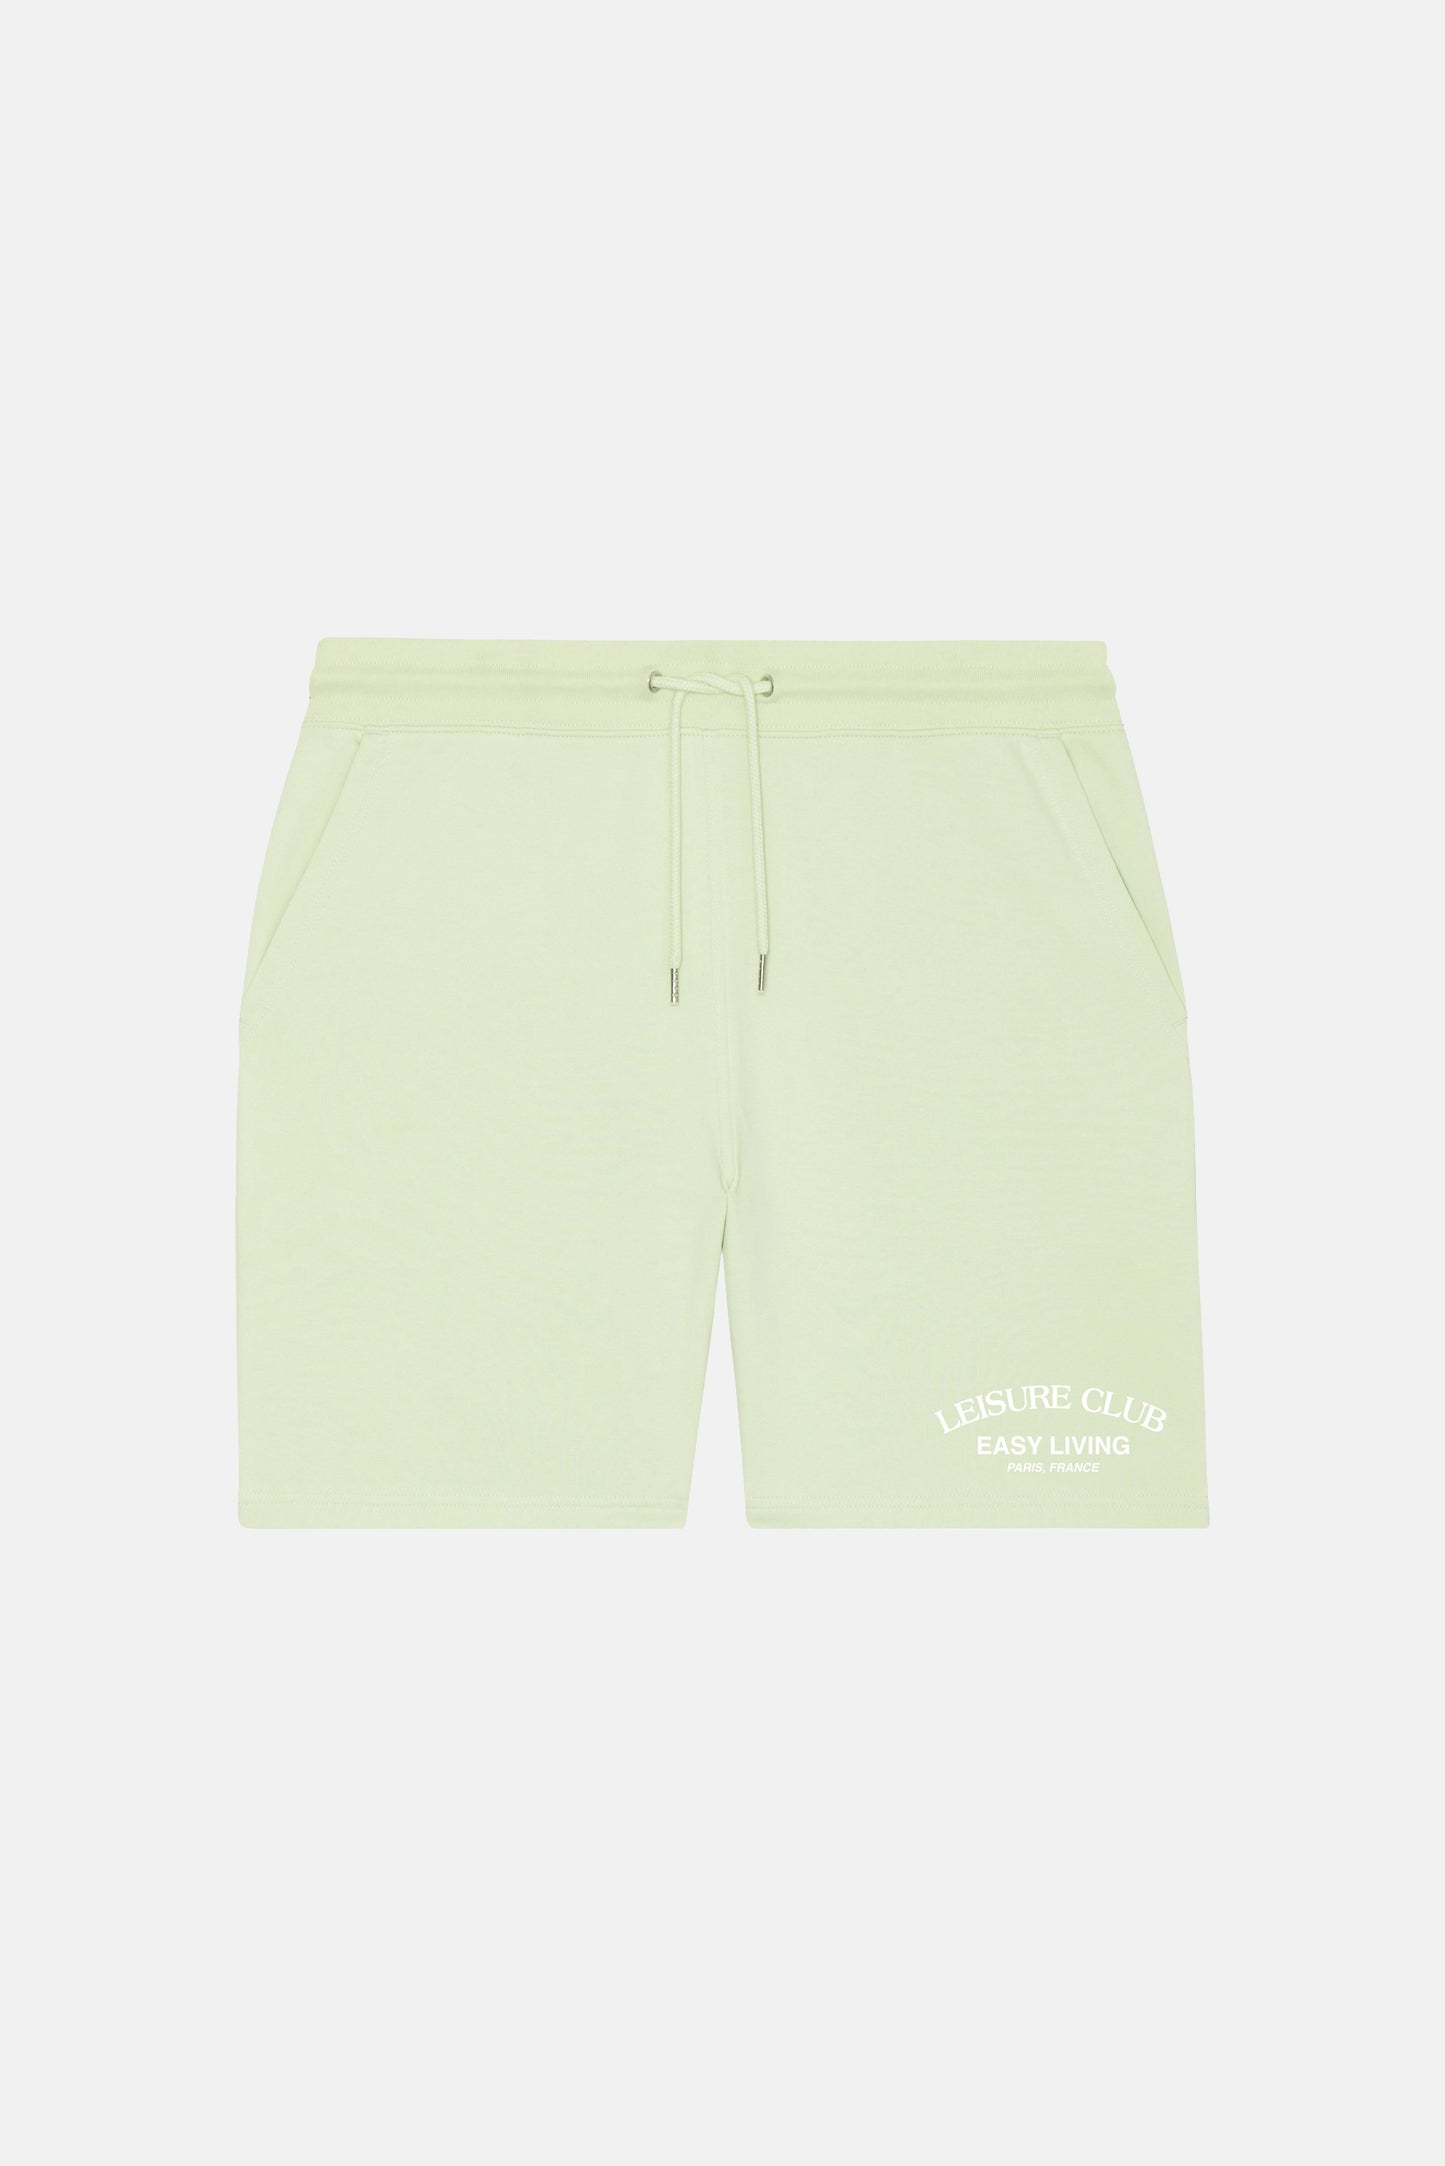 Logo Shorts- Citrus Green